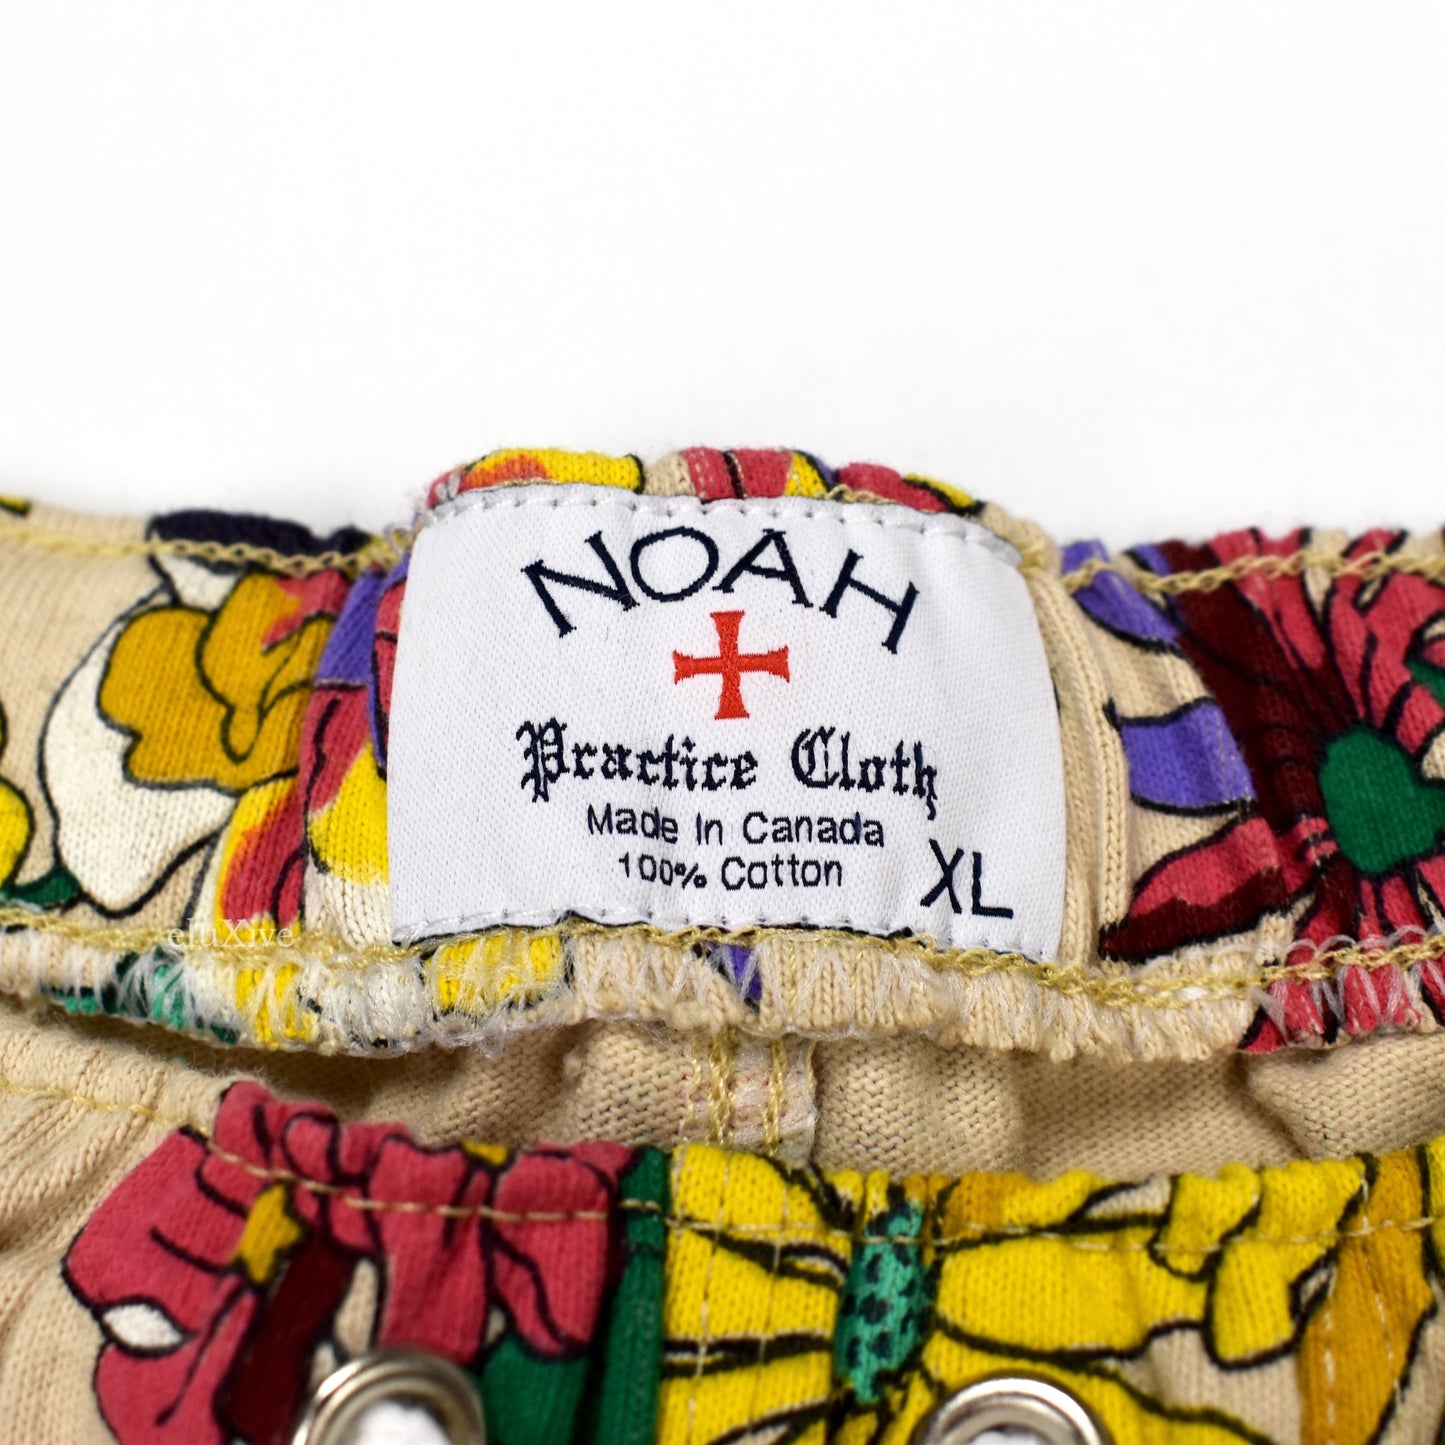 Noah - Floral Print Rugby Shorts (Beige)